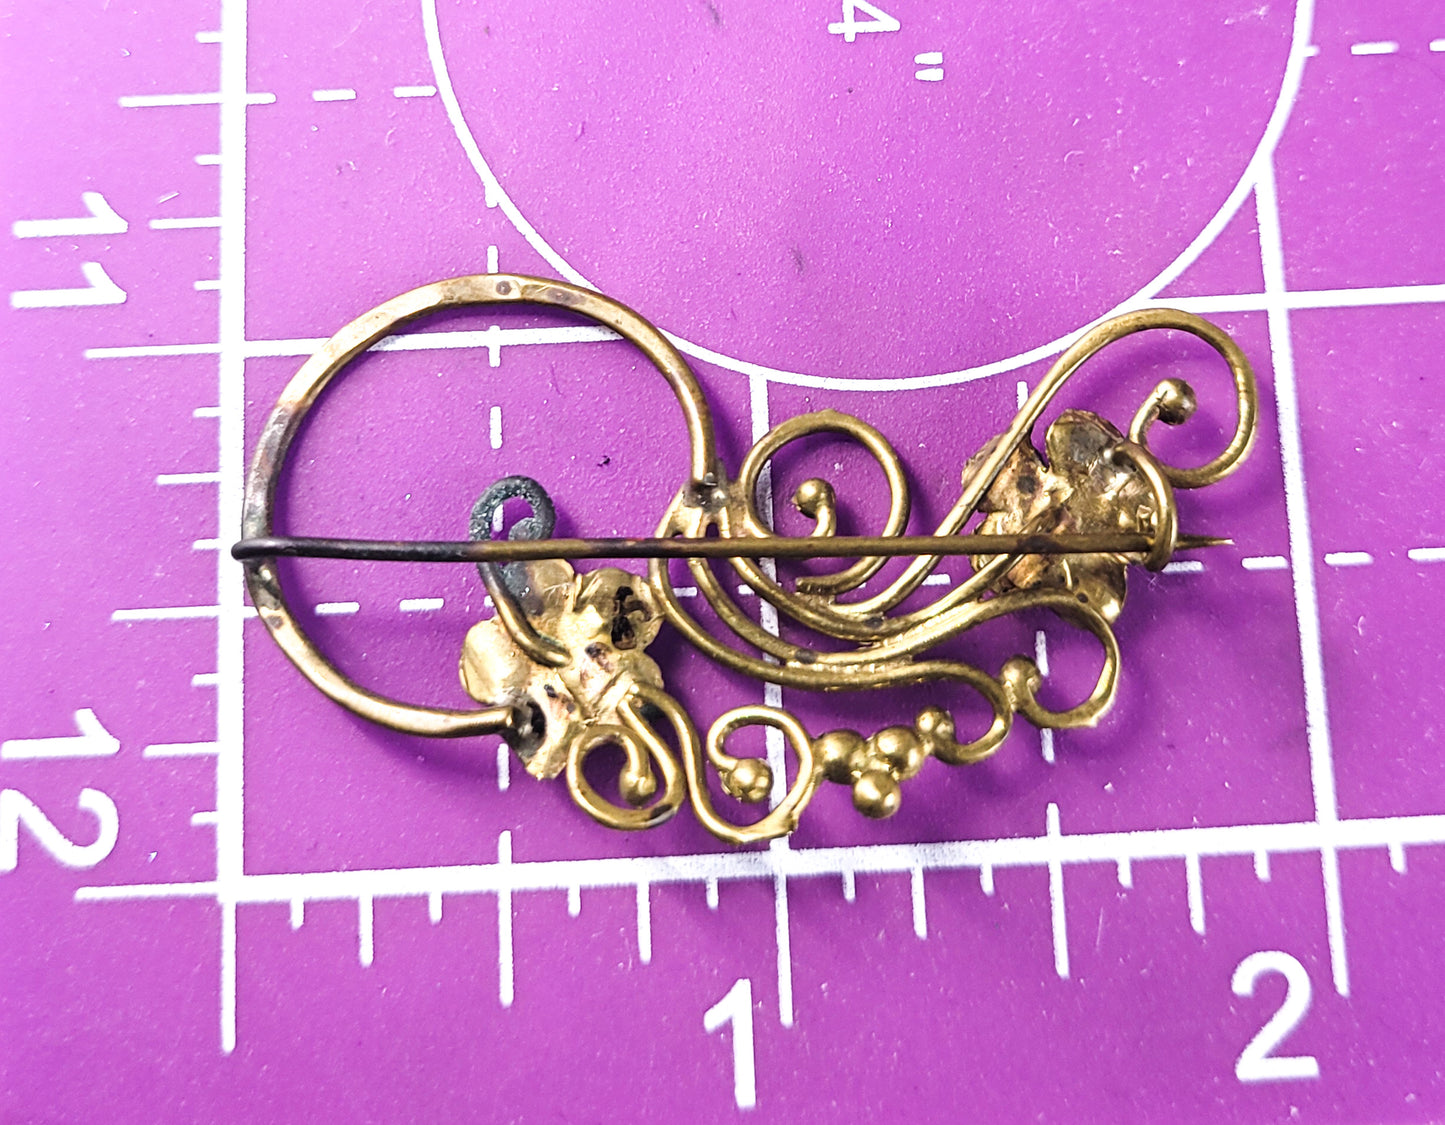 Brutalist handcrafted artisan twisted wire vintage flower brooch